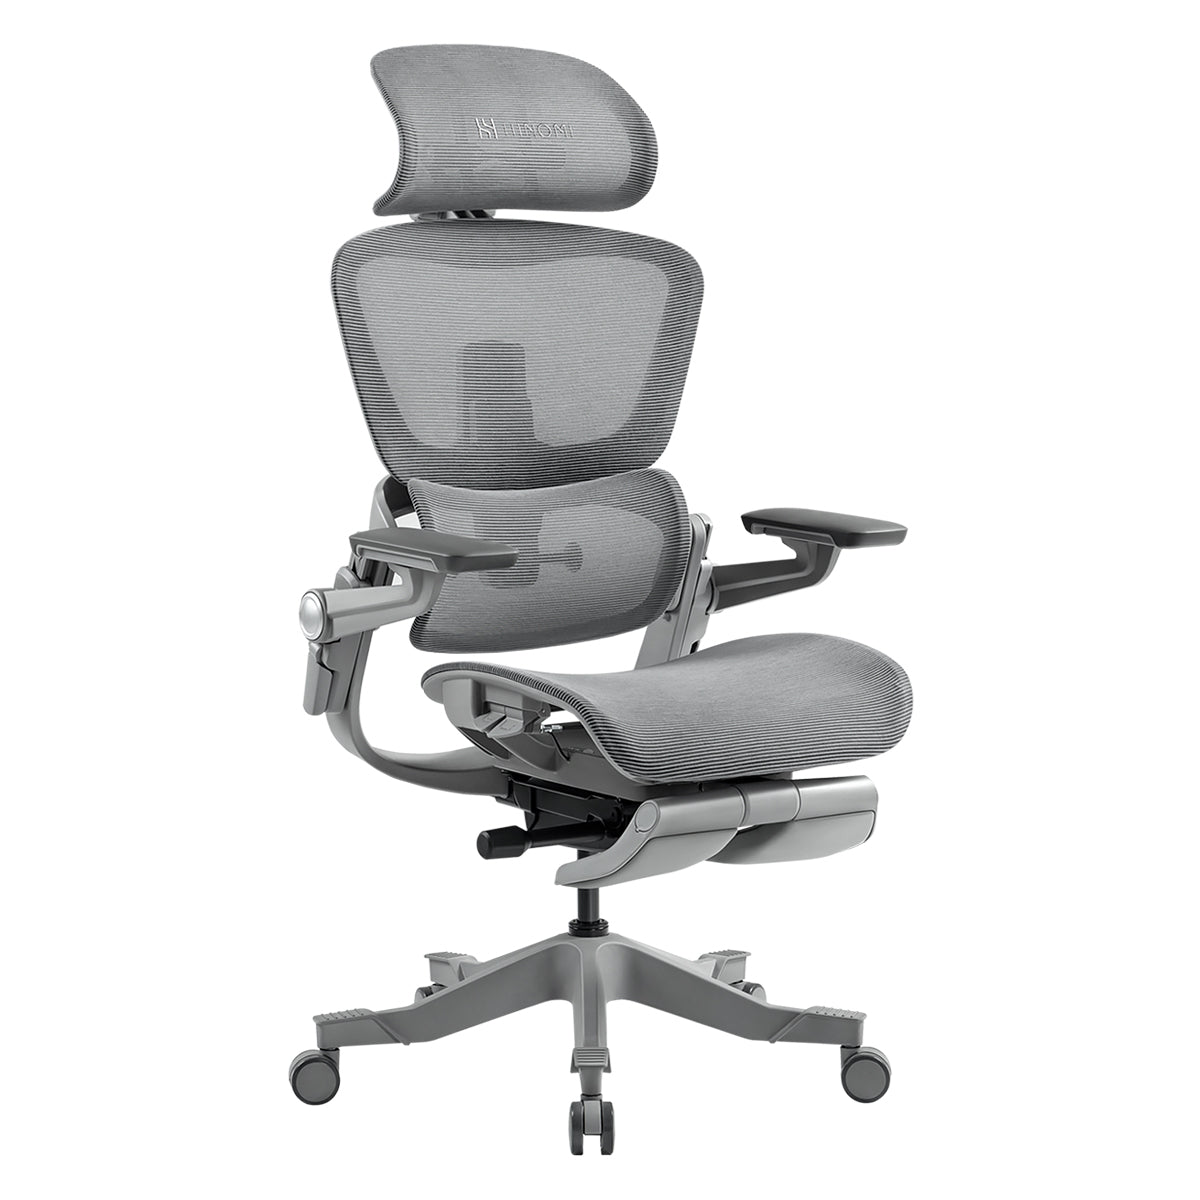 H1 Pro Ergonomic Office Chair (Referral)